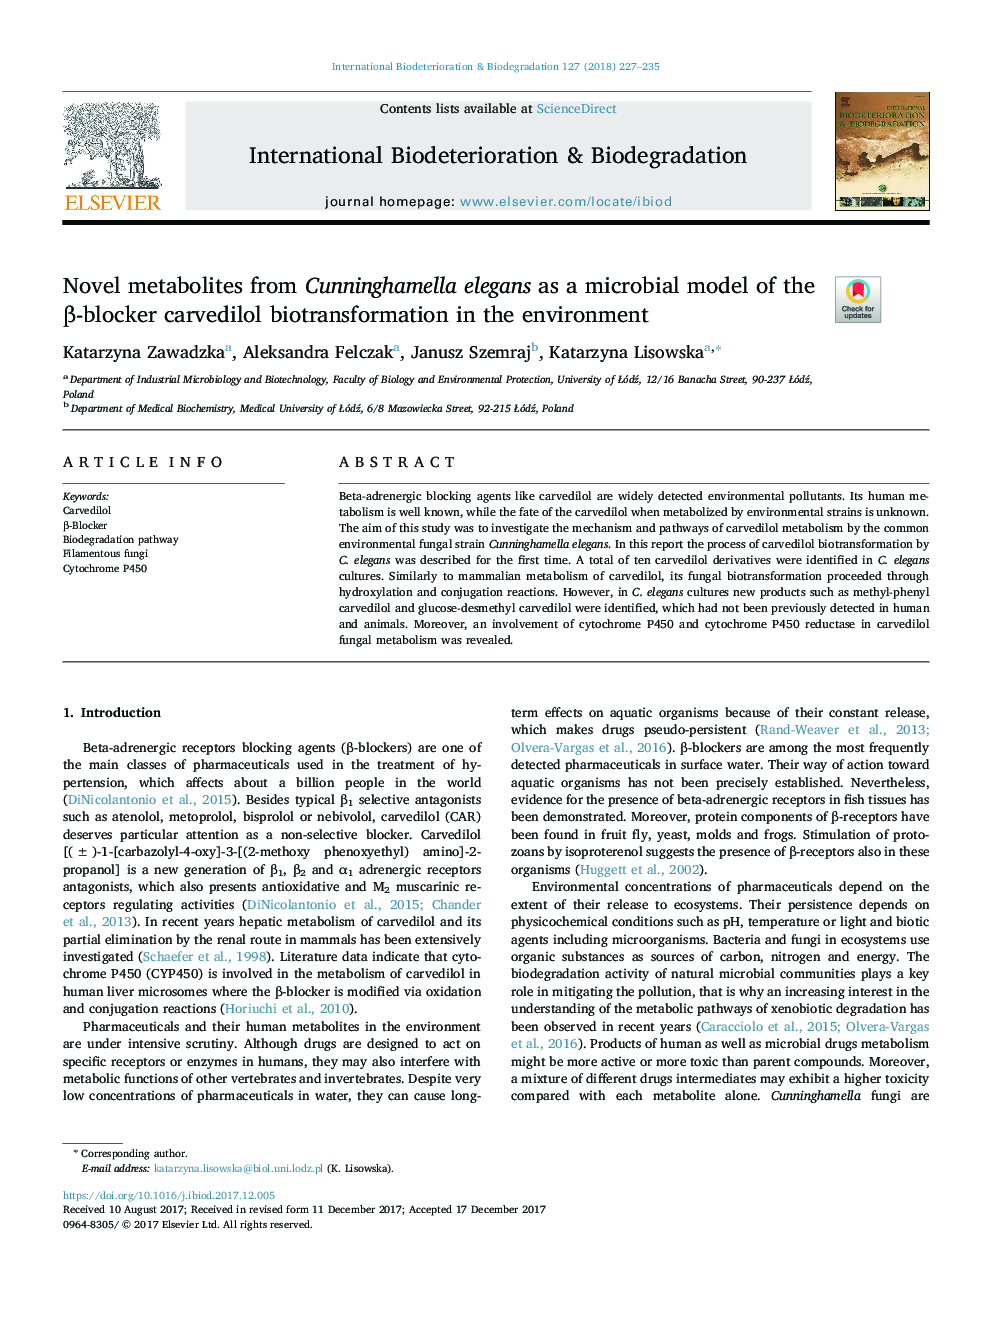 Novel metabolites from Cunninghamella elegans as a microbial model of the Î²-blocker carvedilol biotransformation in the environment